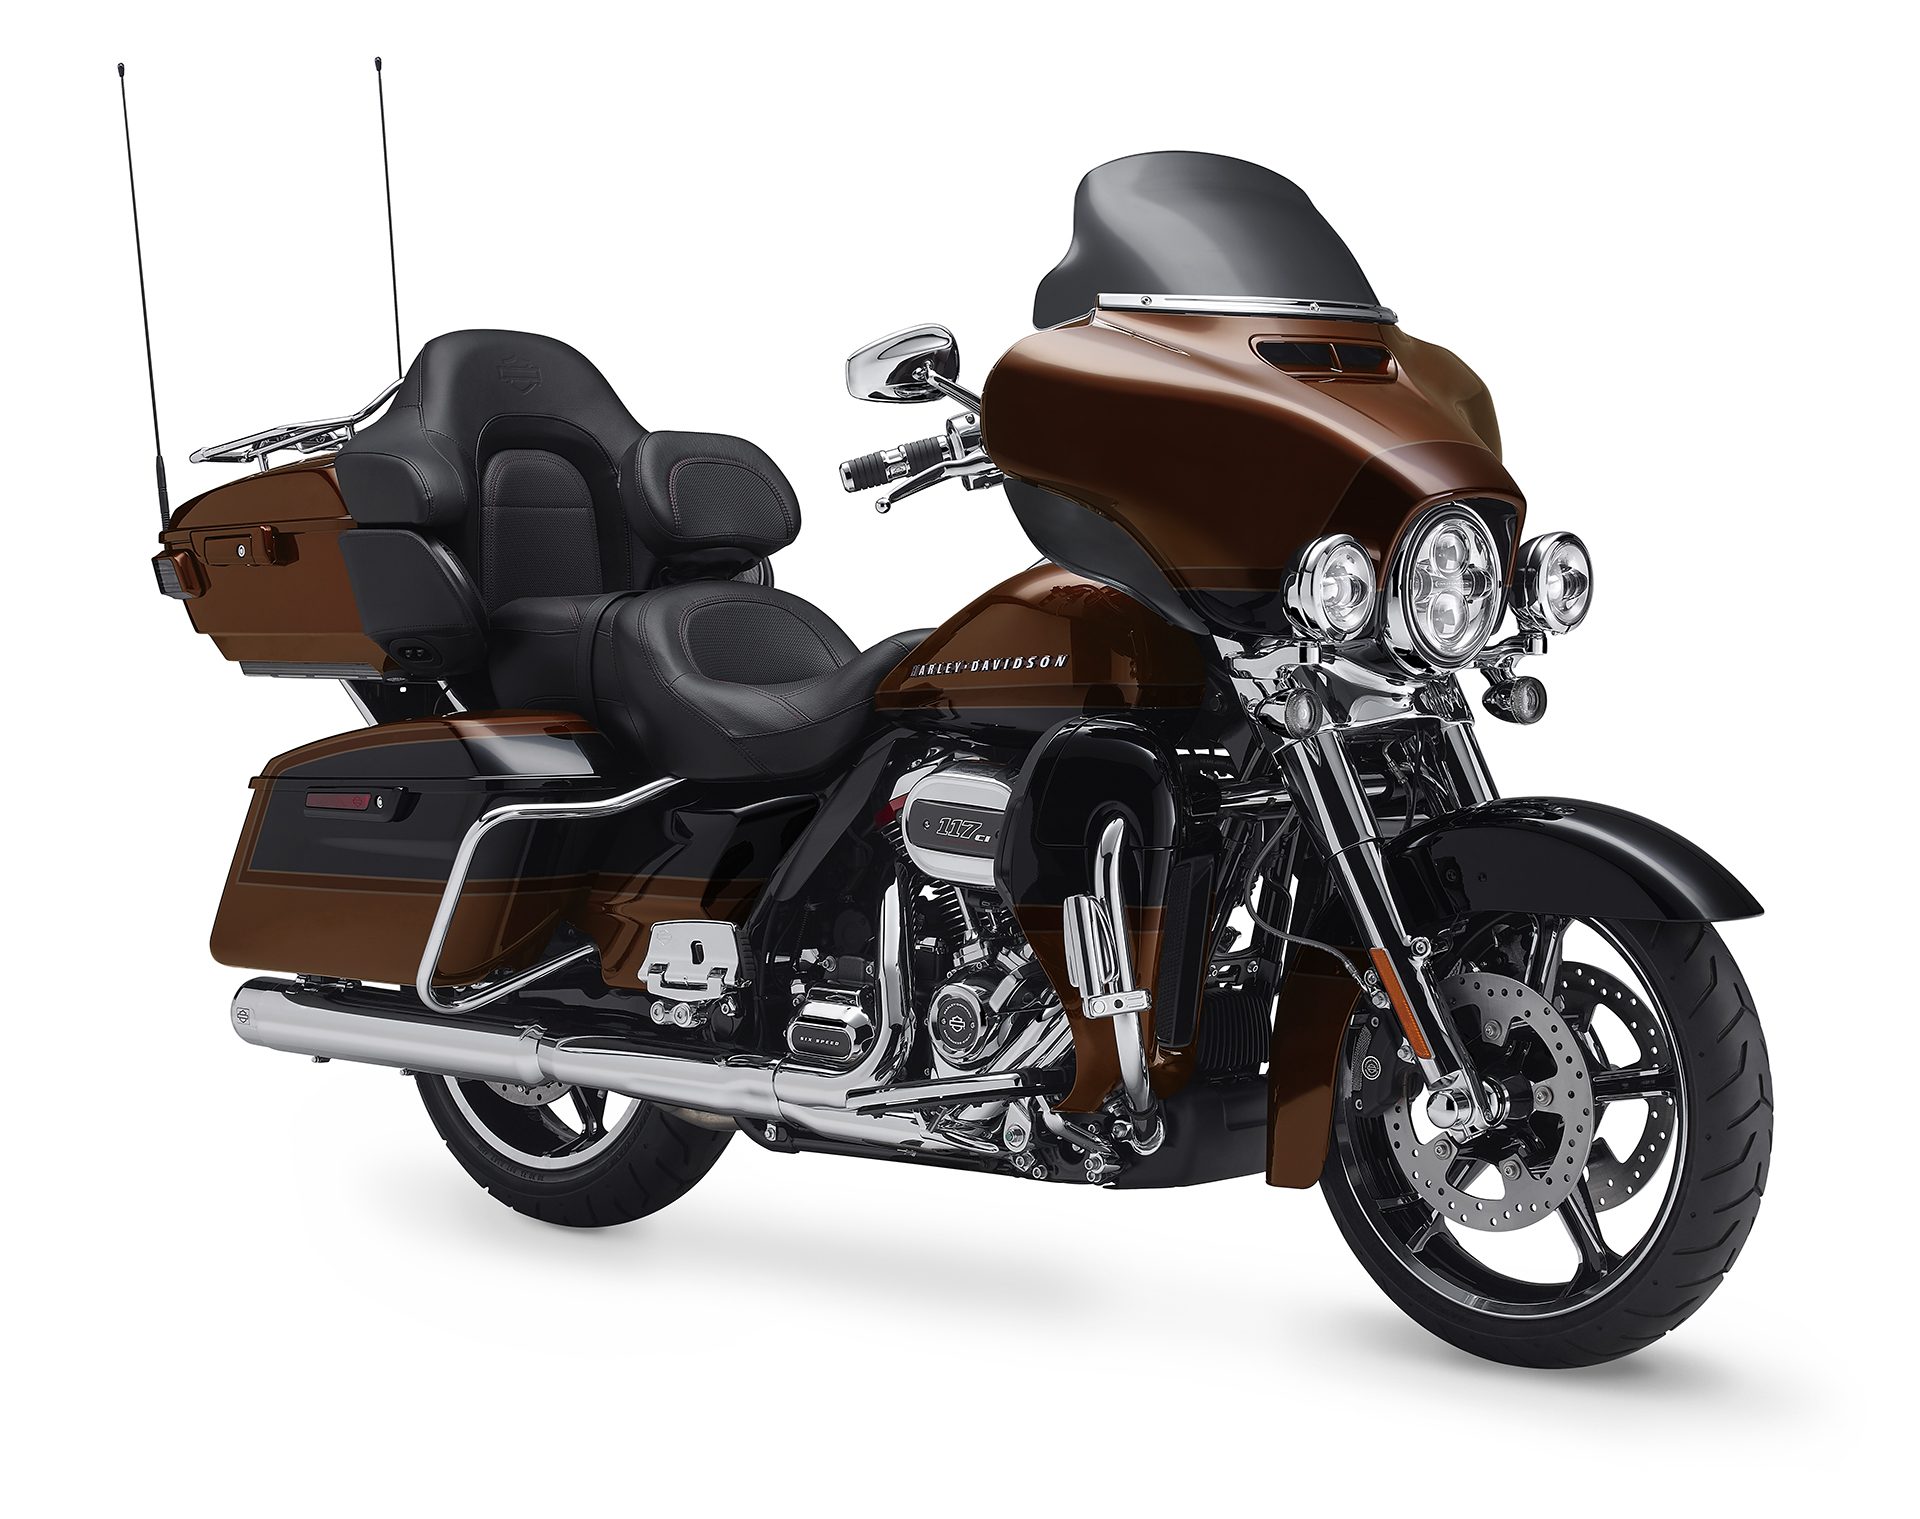 Harley Davidson Cvo Limited 2019 Neufahrzeug Kaufen Bei Thunderbike